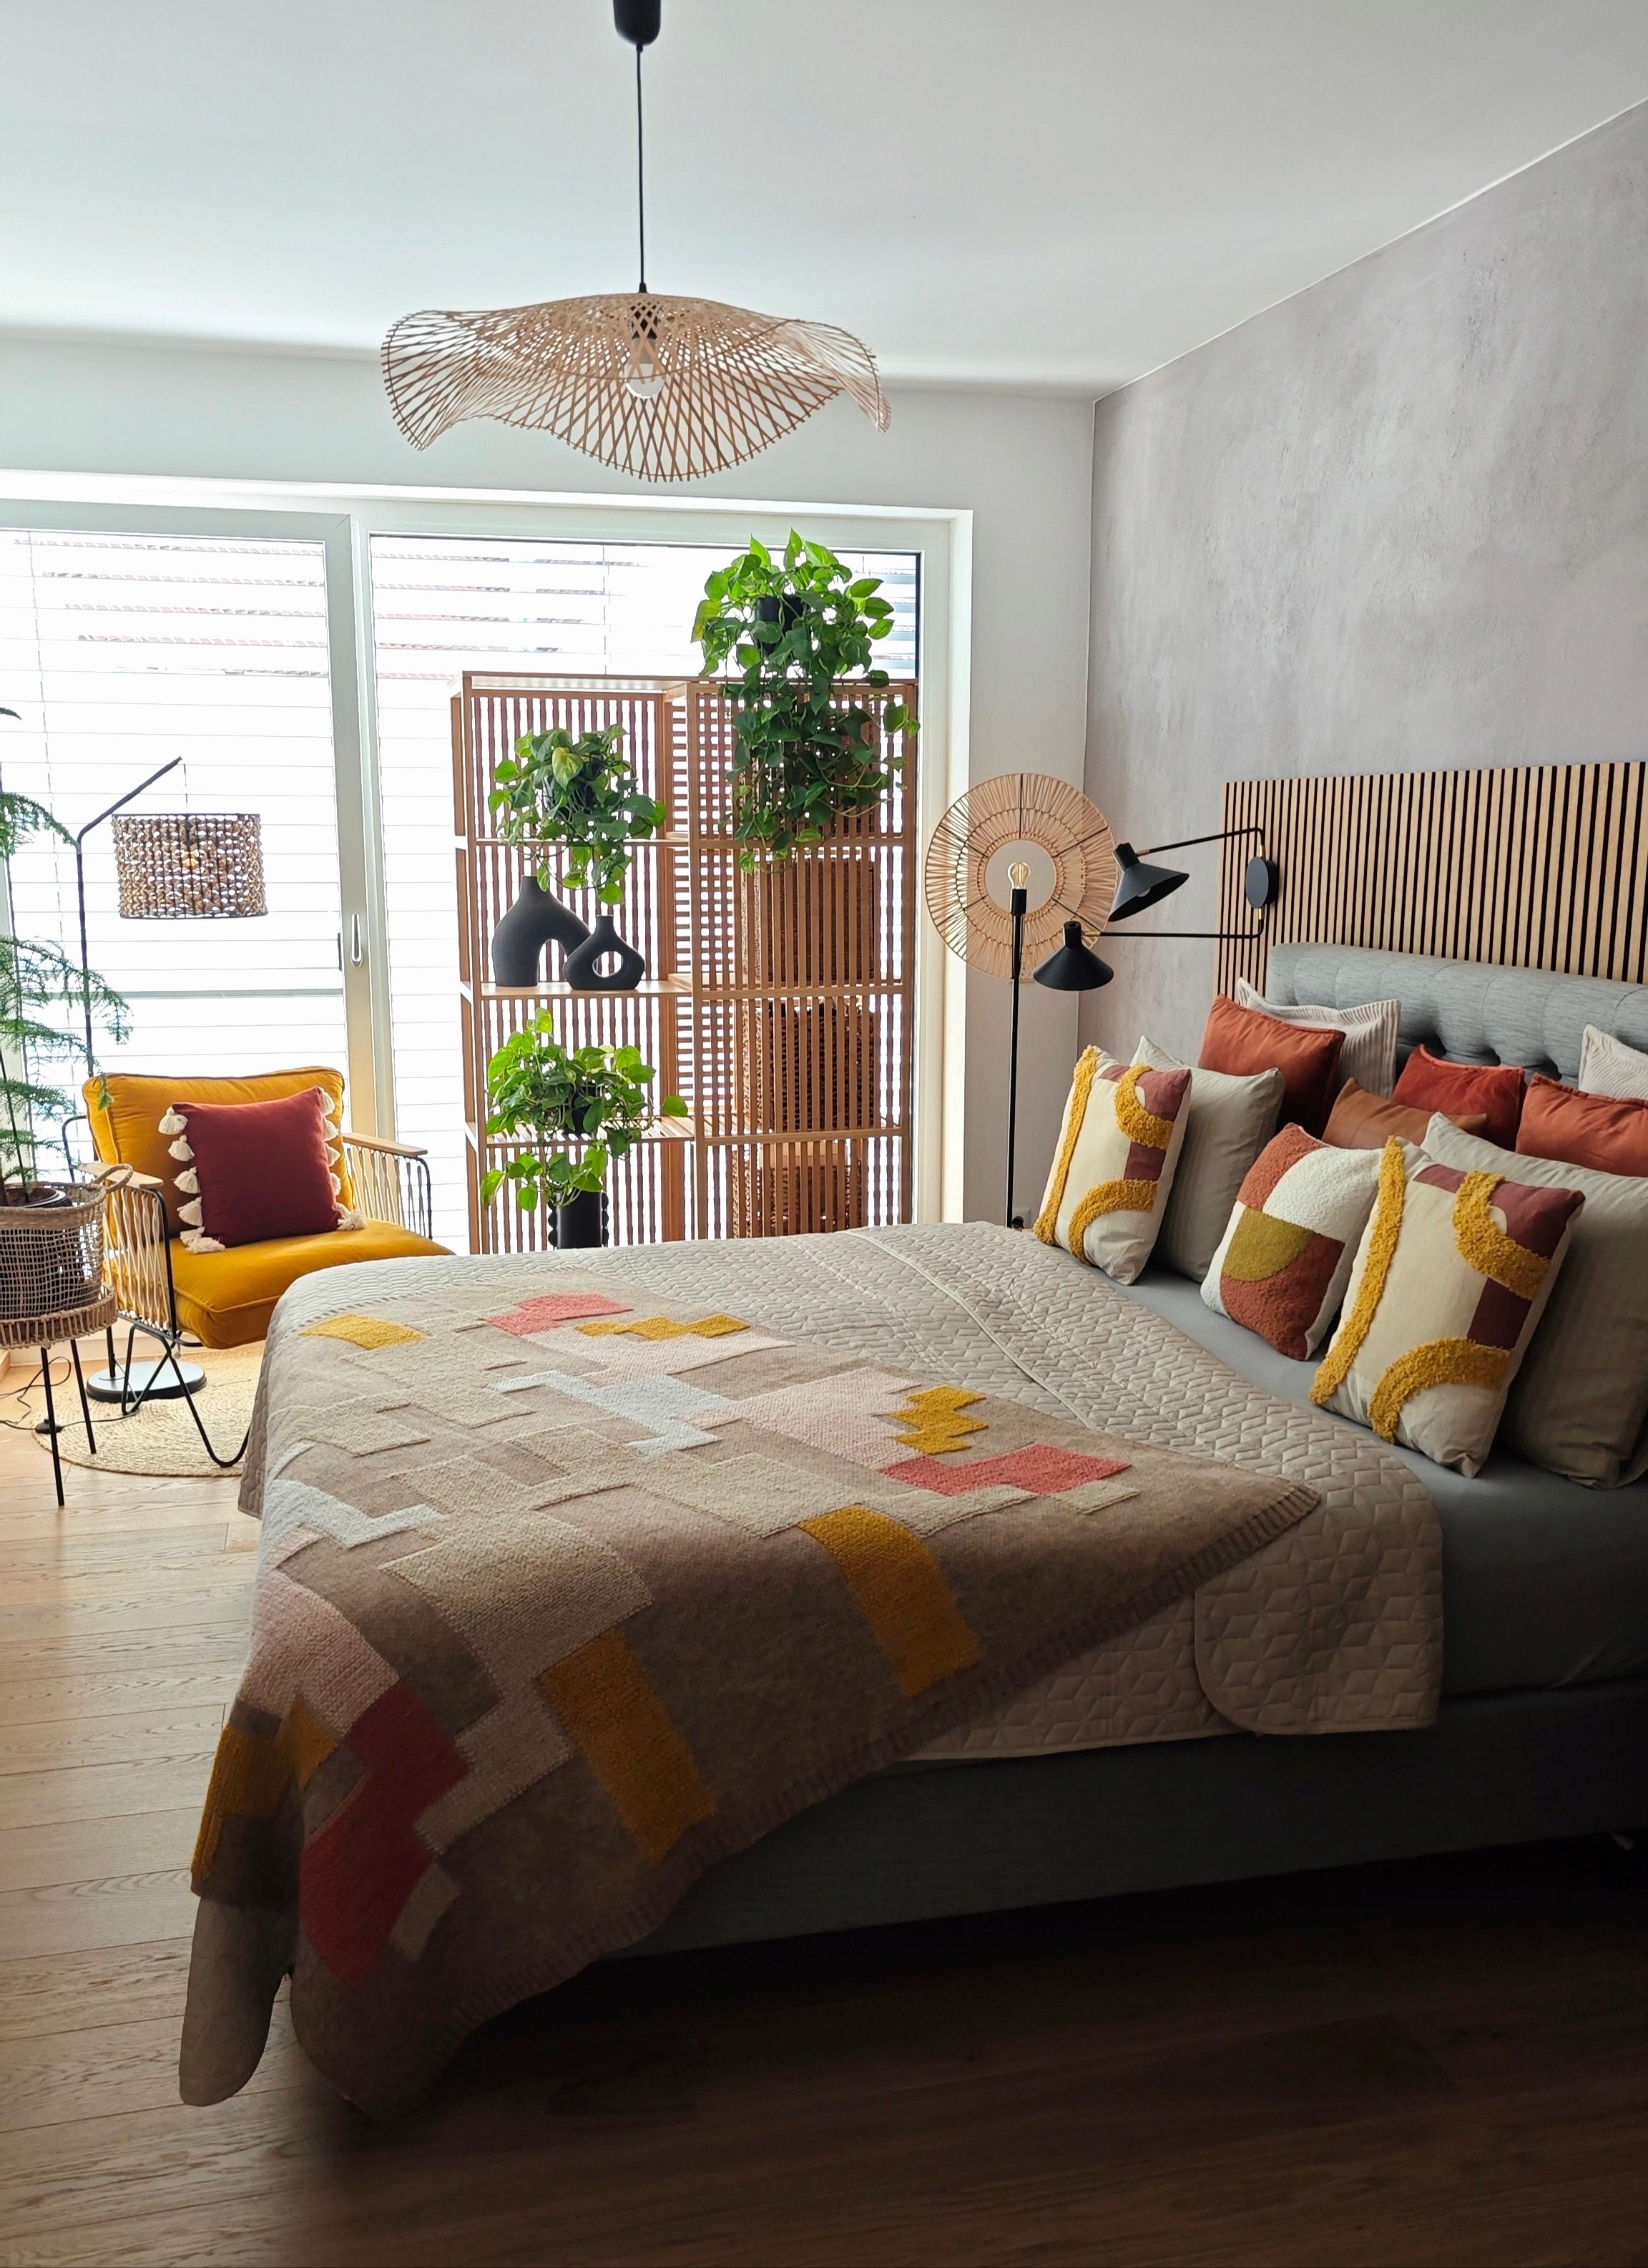 #cozy #home #living #interior #decor #decoration #chillen #couchliebt #pillow #pillowlove #hygge #fallvibes #strick #rattan #homesweethome #rome 